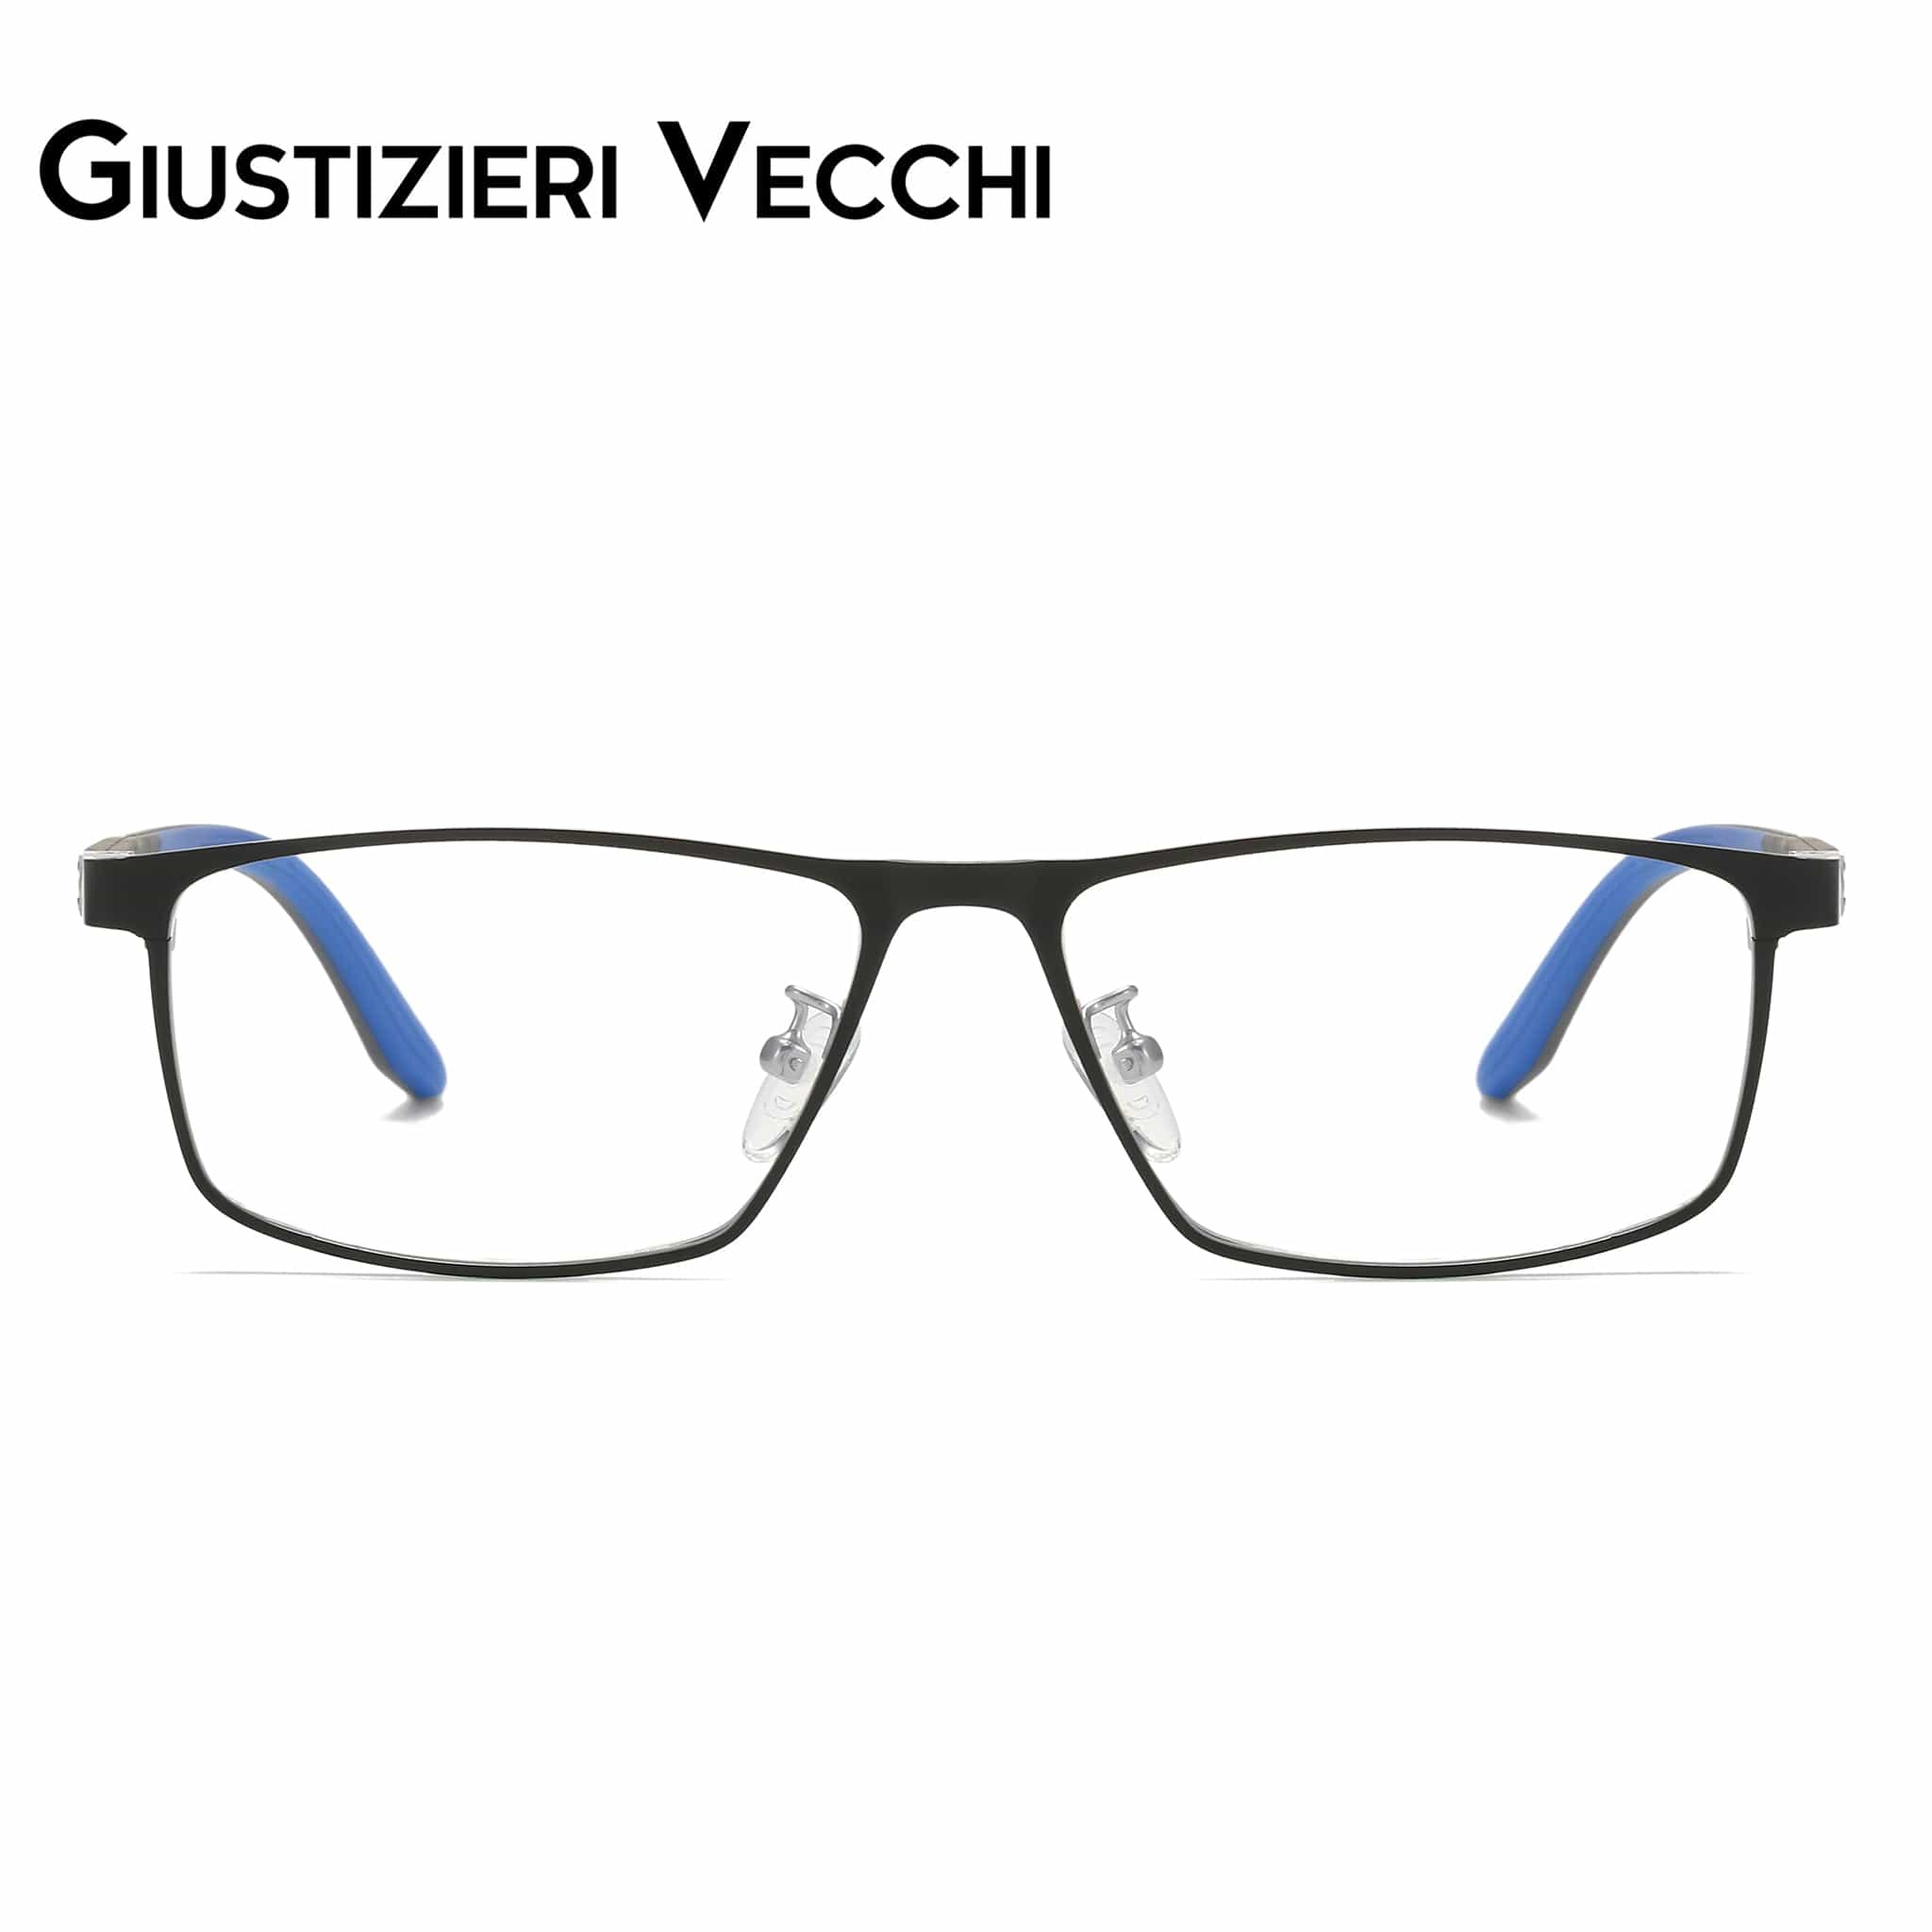 GIUSTIZIERI VECCHI Eyeglasses Large / Black with Blue IceStorm Duo